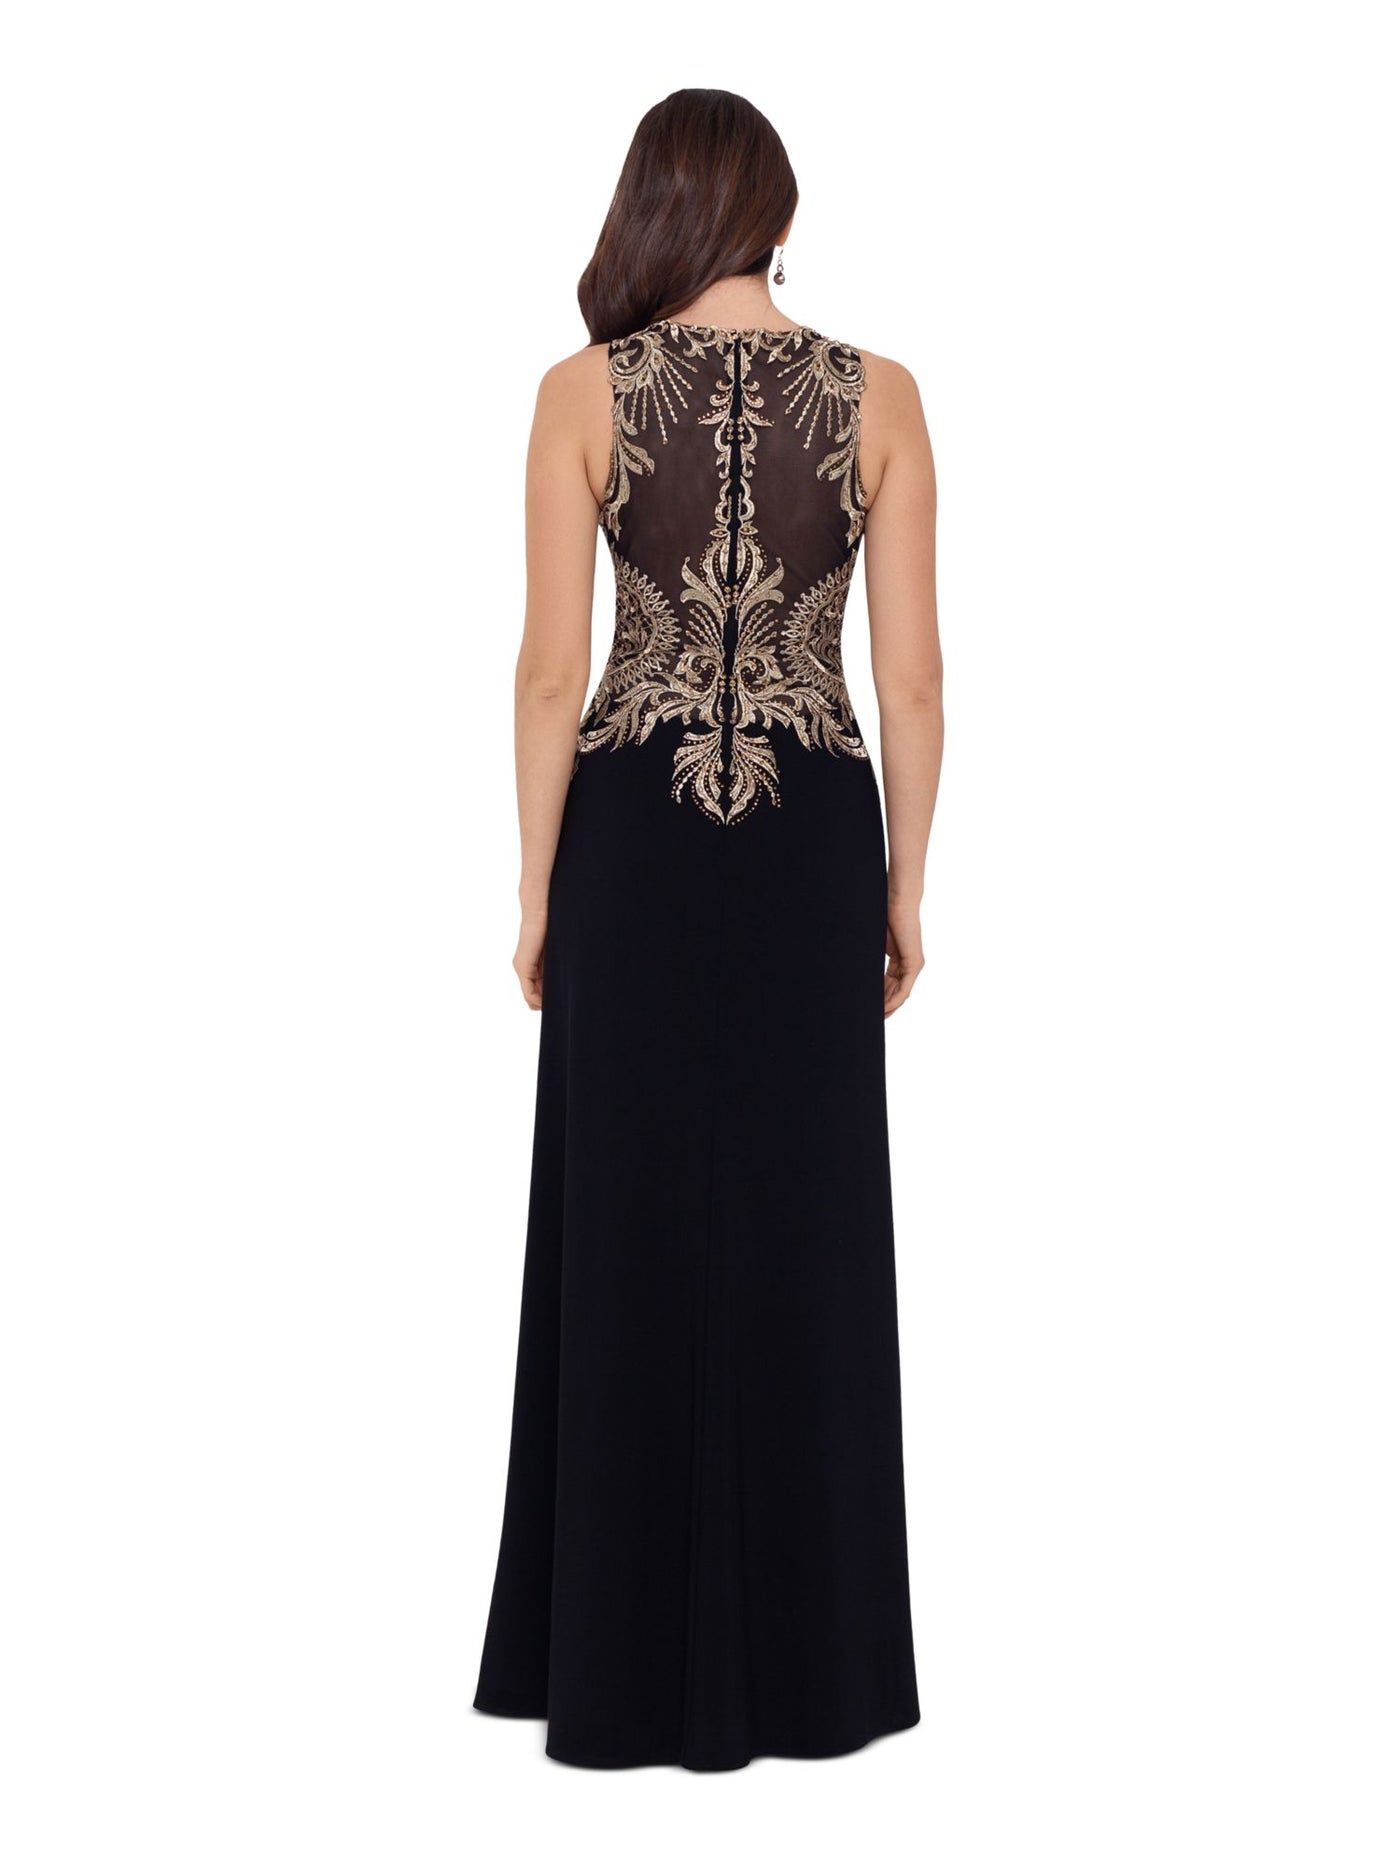 BETSY & ADAM Womens Embellished Zippered Sleeveless Jewel Neck Full-Length Formal Dress